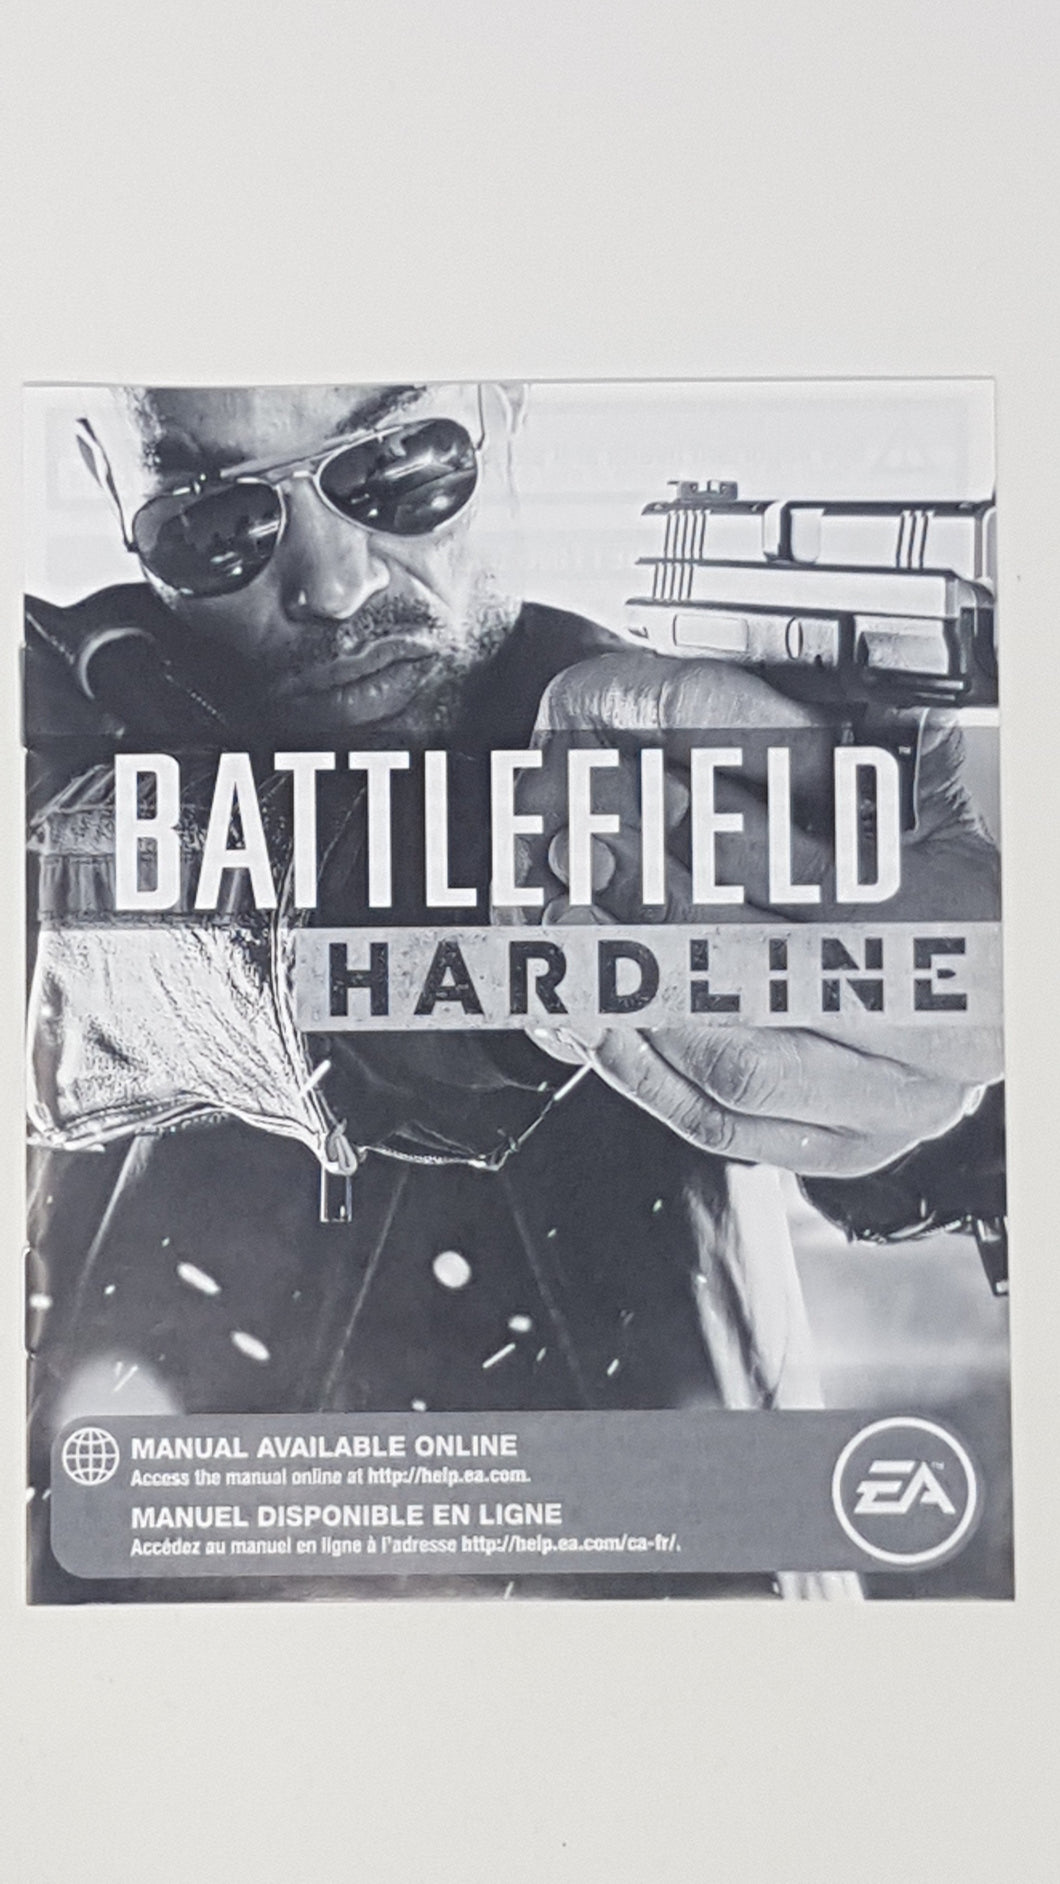 Battlefield Hardline Health & Safety Warnings [manuel] Bilingue - Sony Playstation 4 | PS4